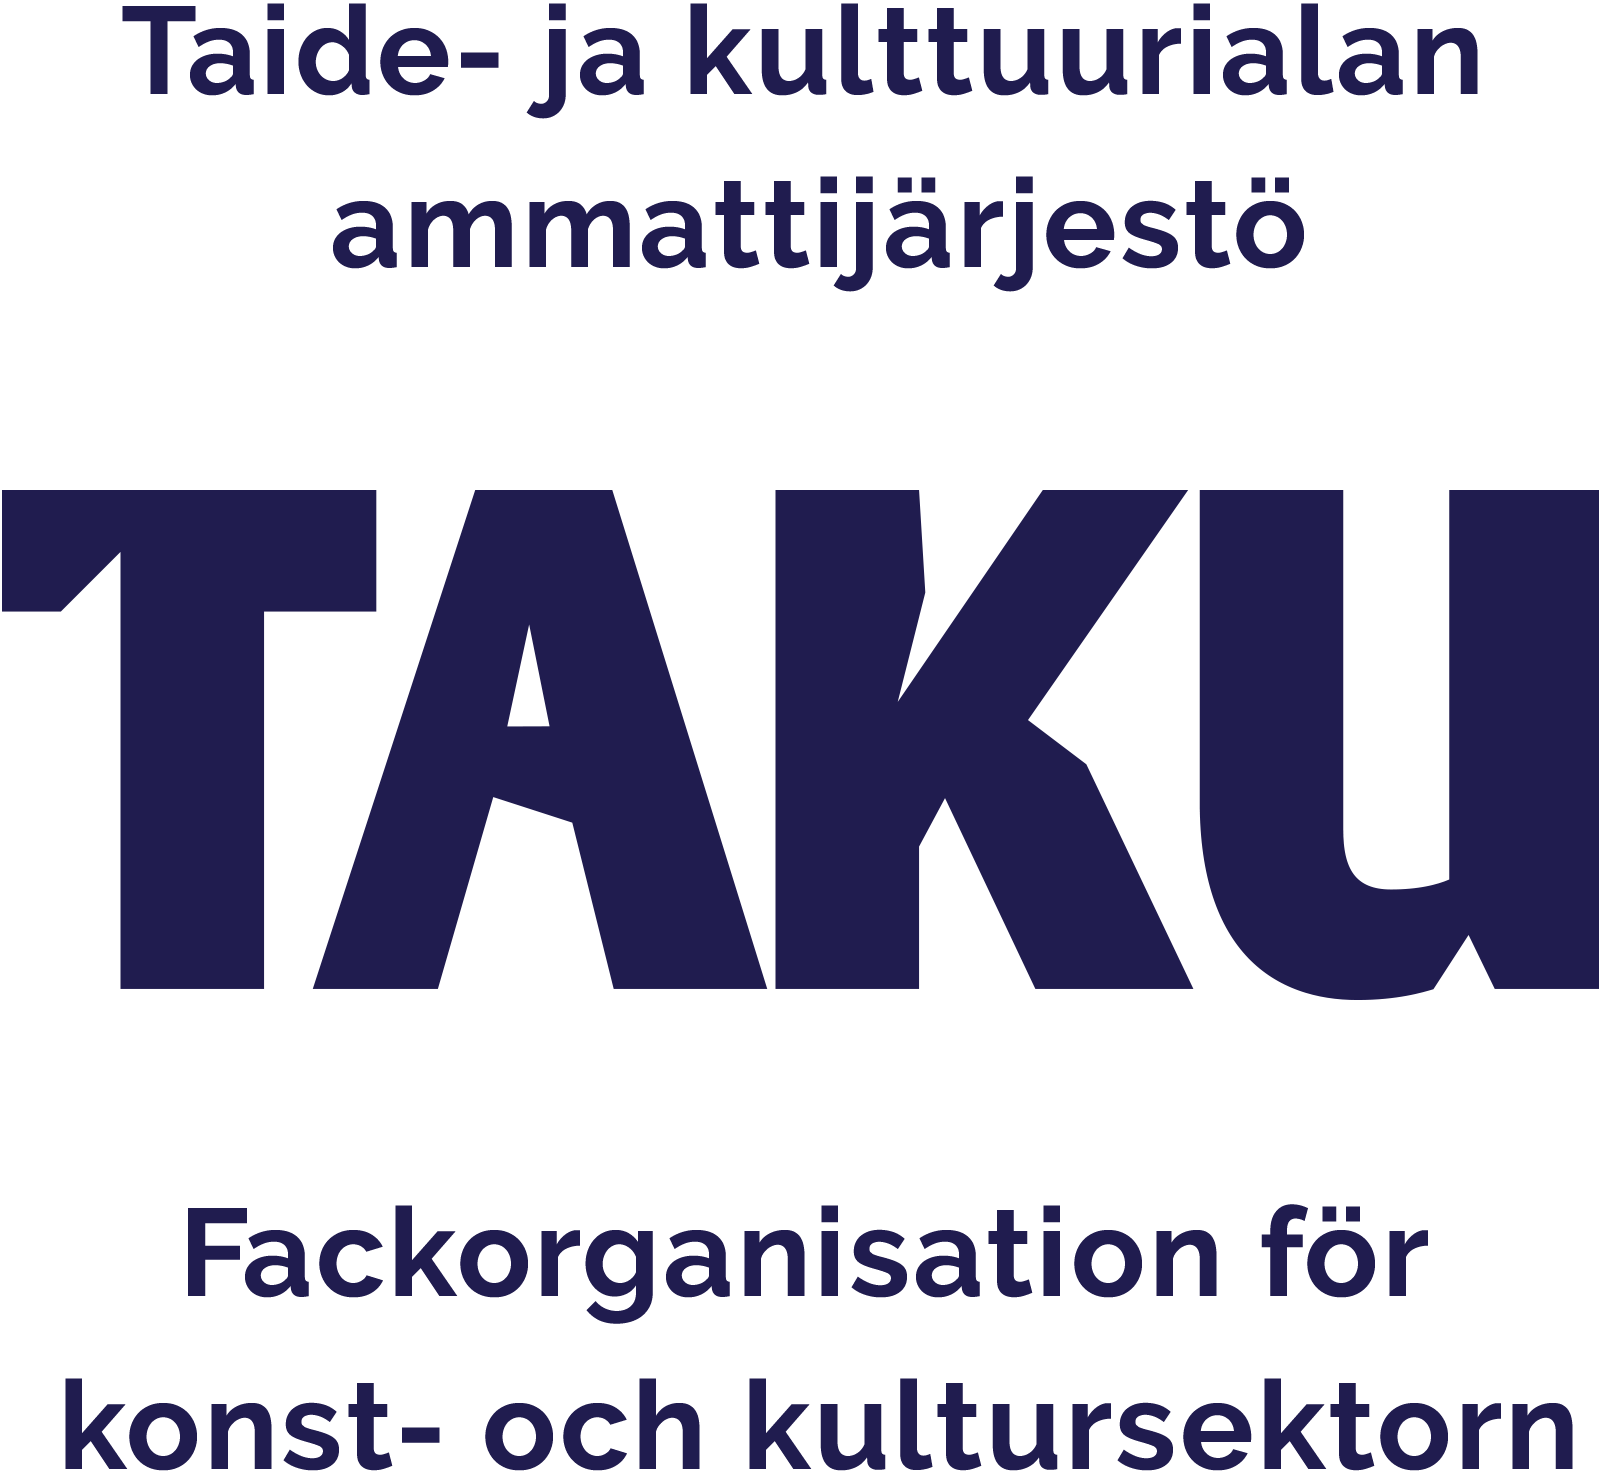 TAKU logo